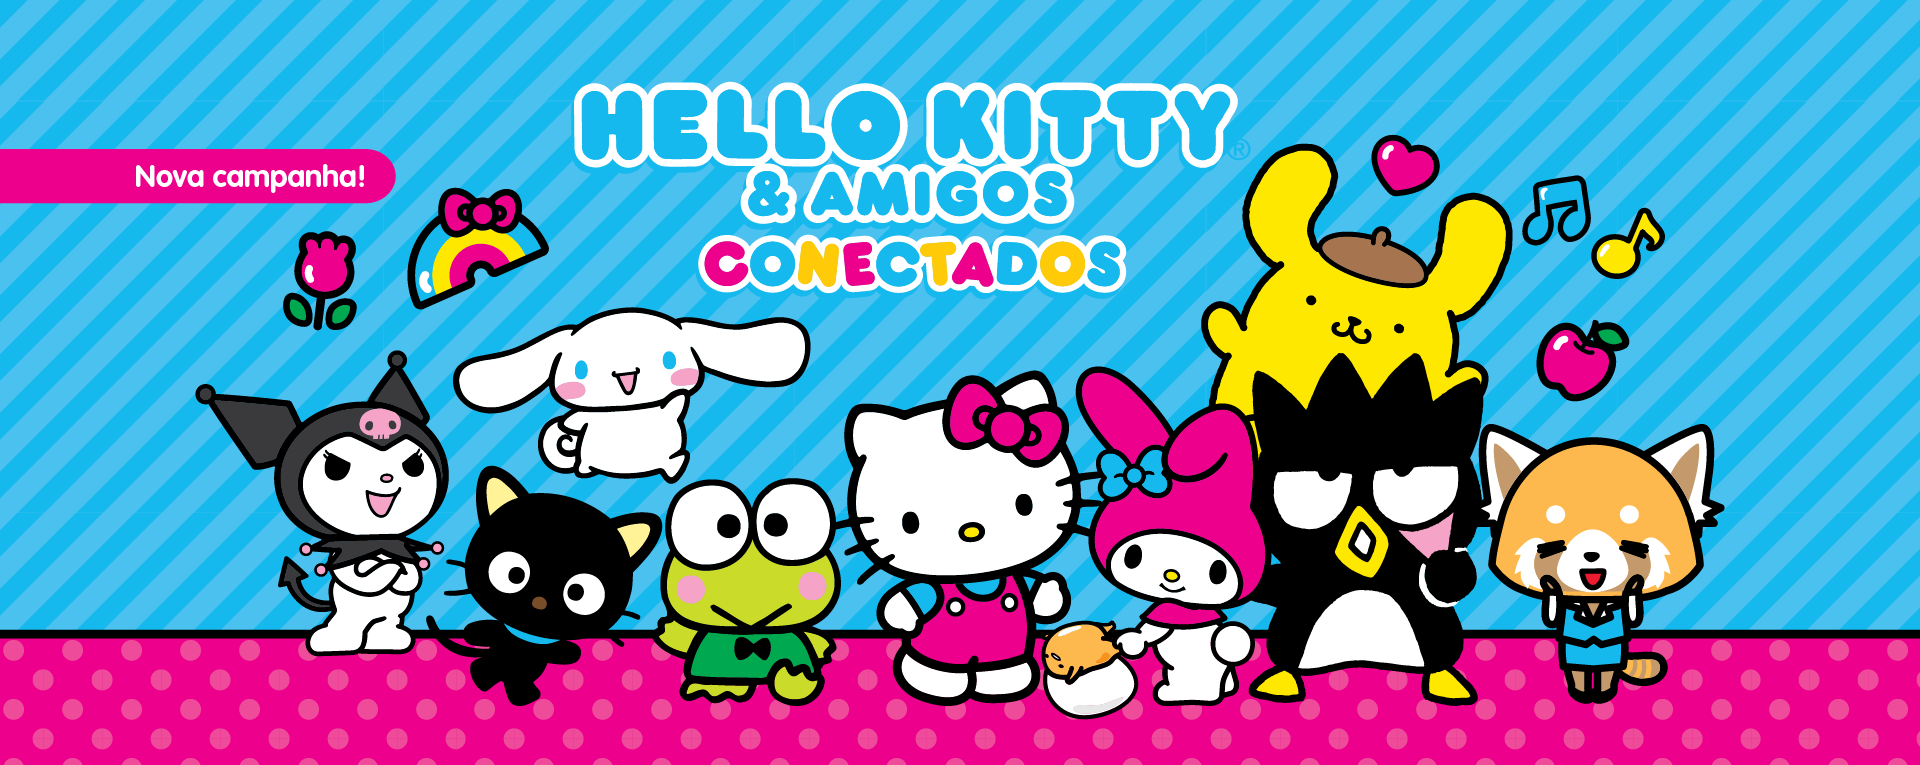 qual os personagens do hello kitty  Hello kitty, Sanrio hello kitty, Personagens  sanrio